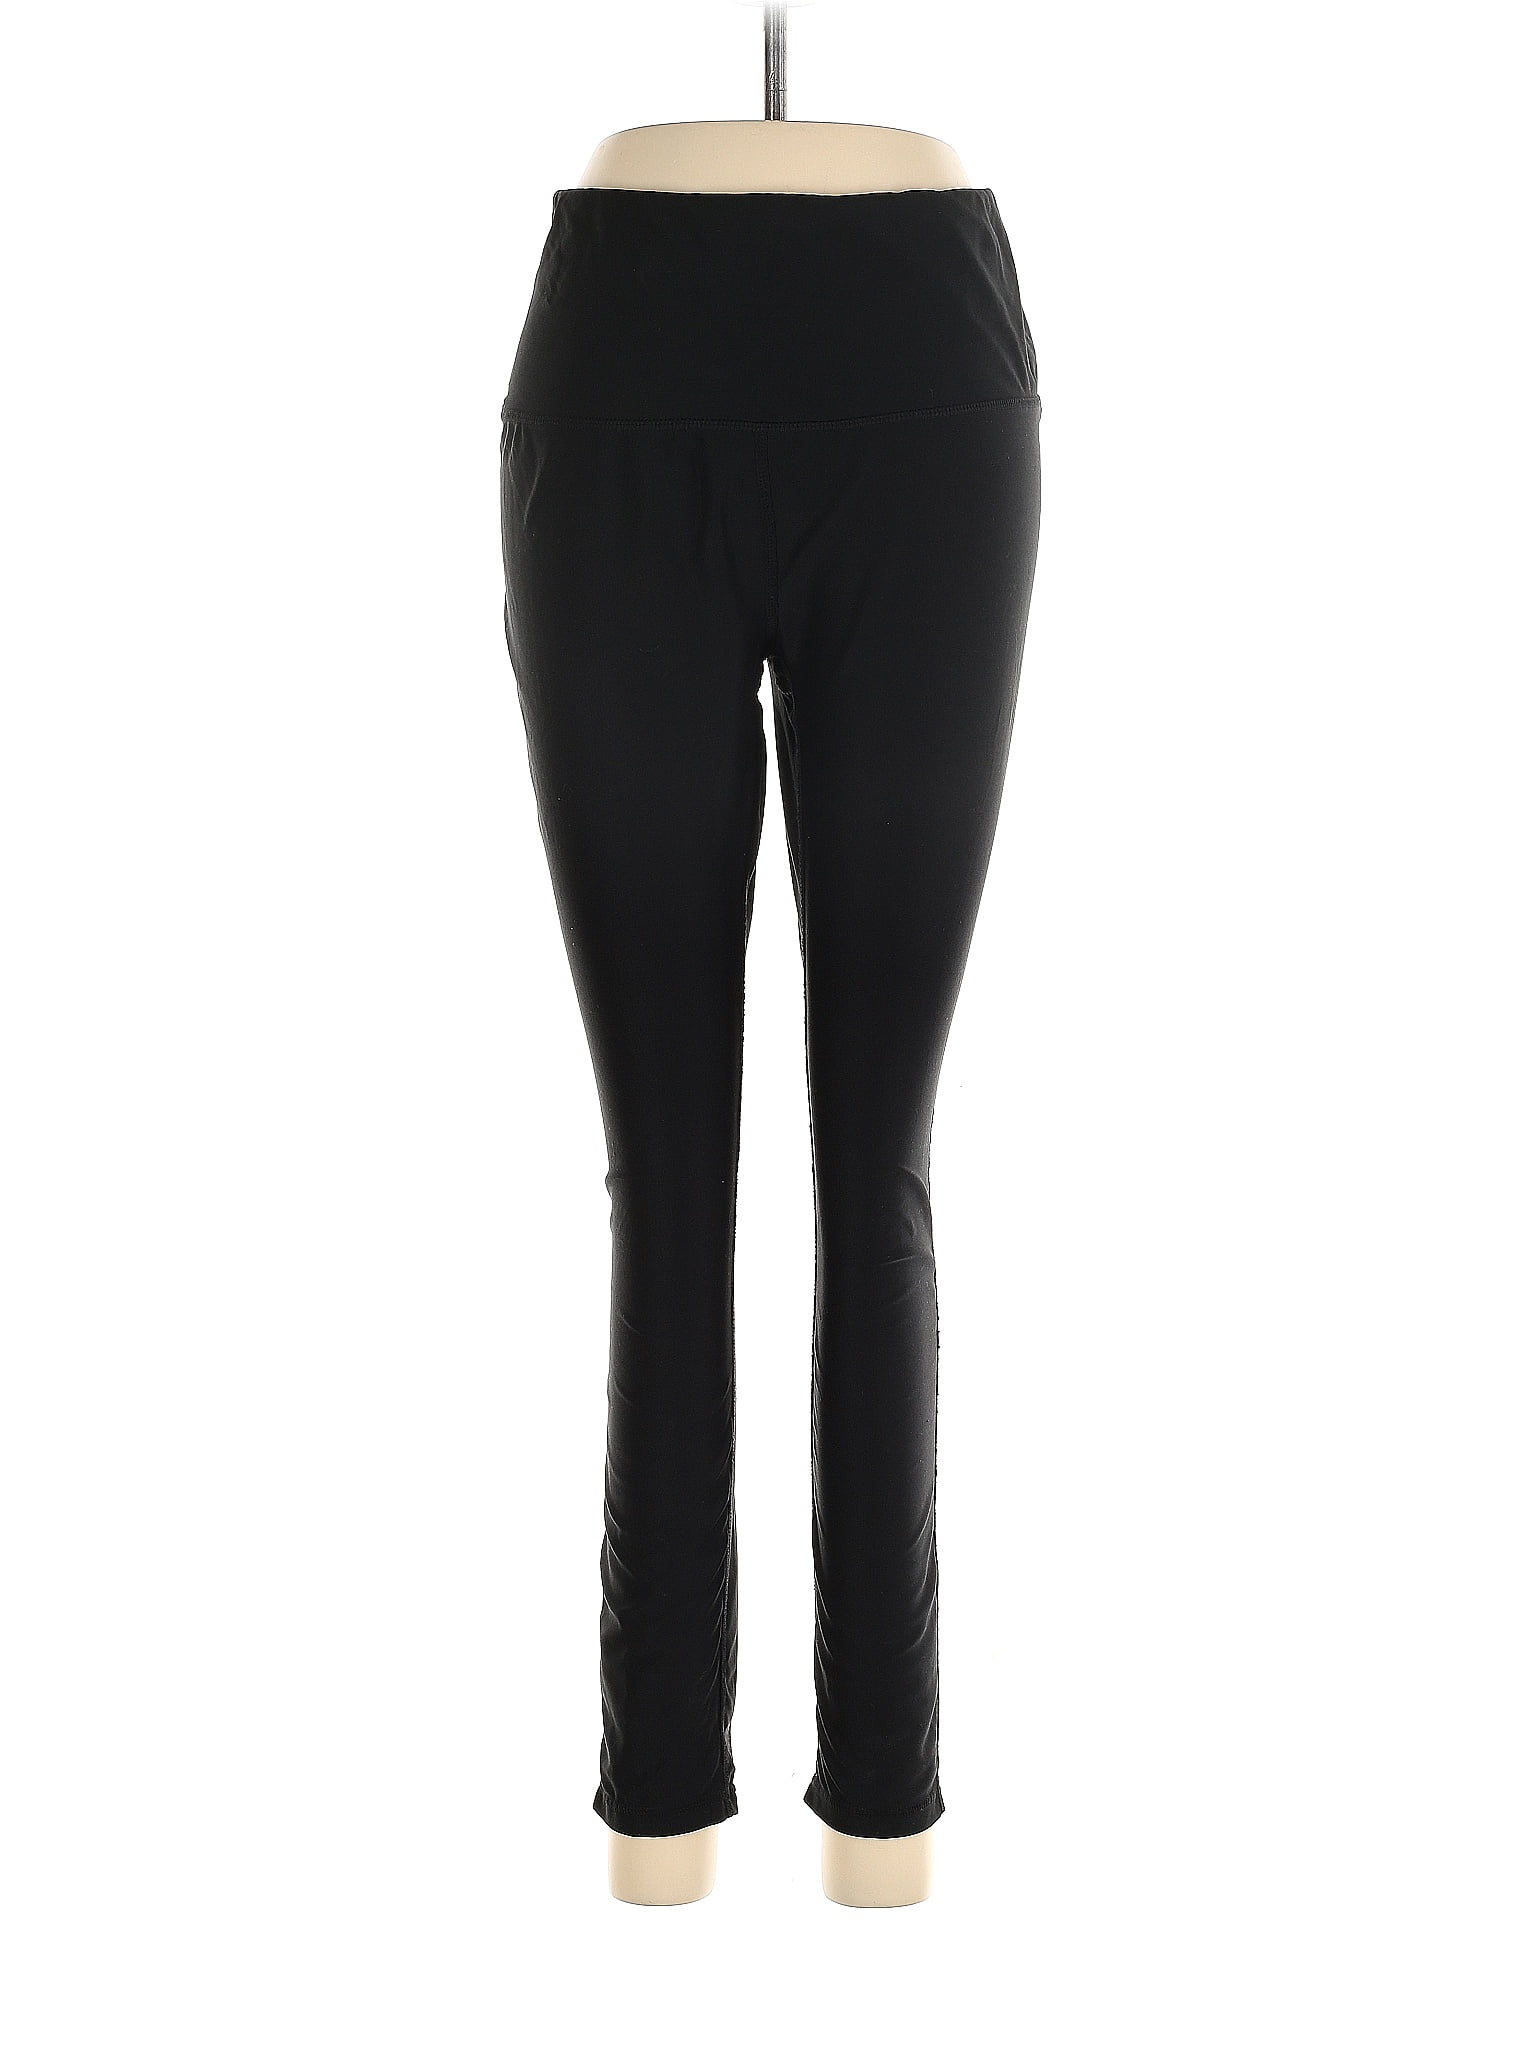 Primark Black Bodysuit Size M - 59% off